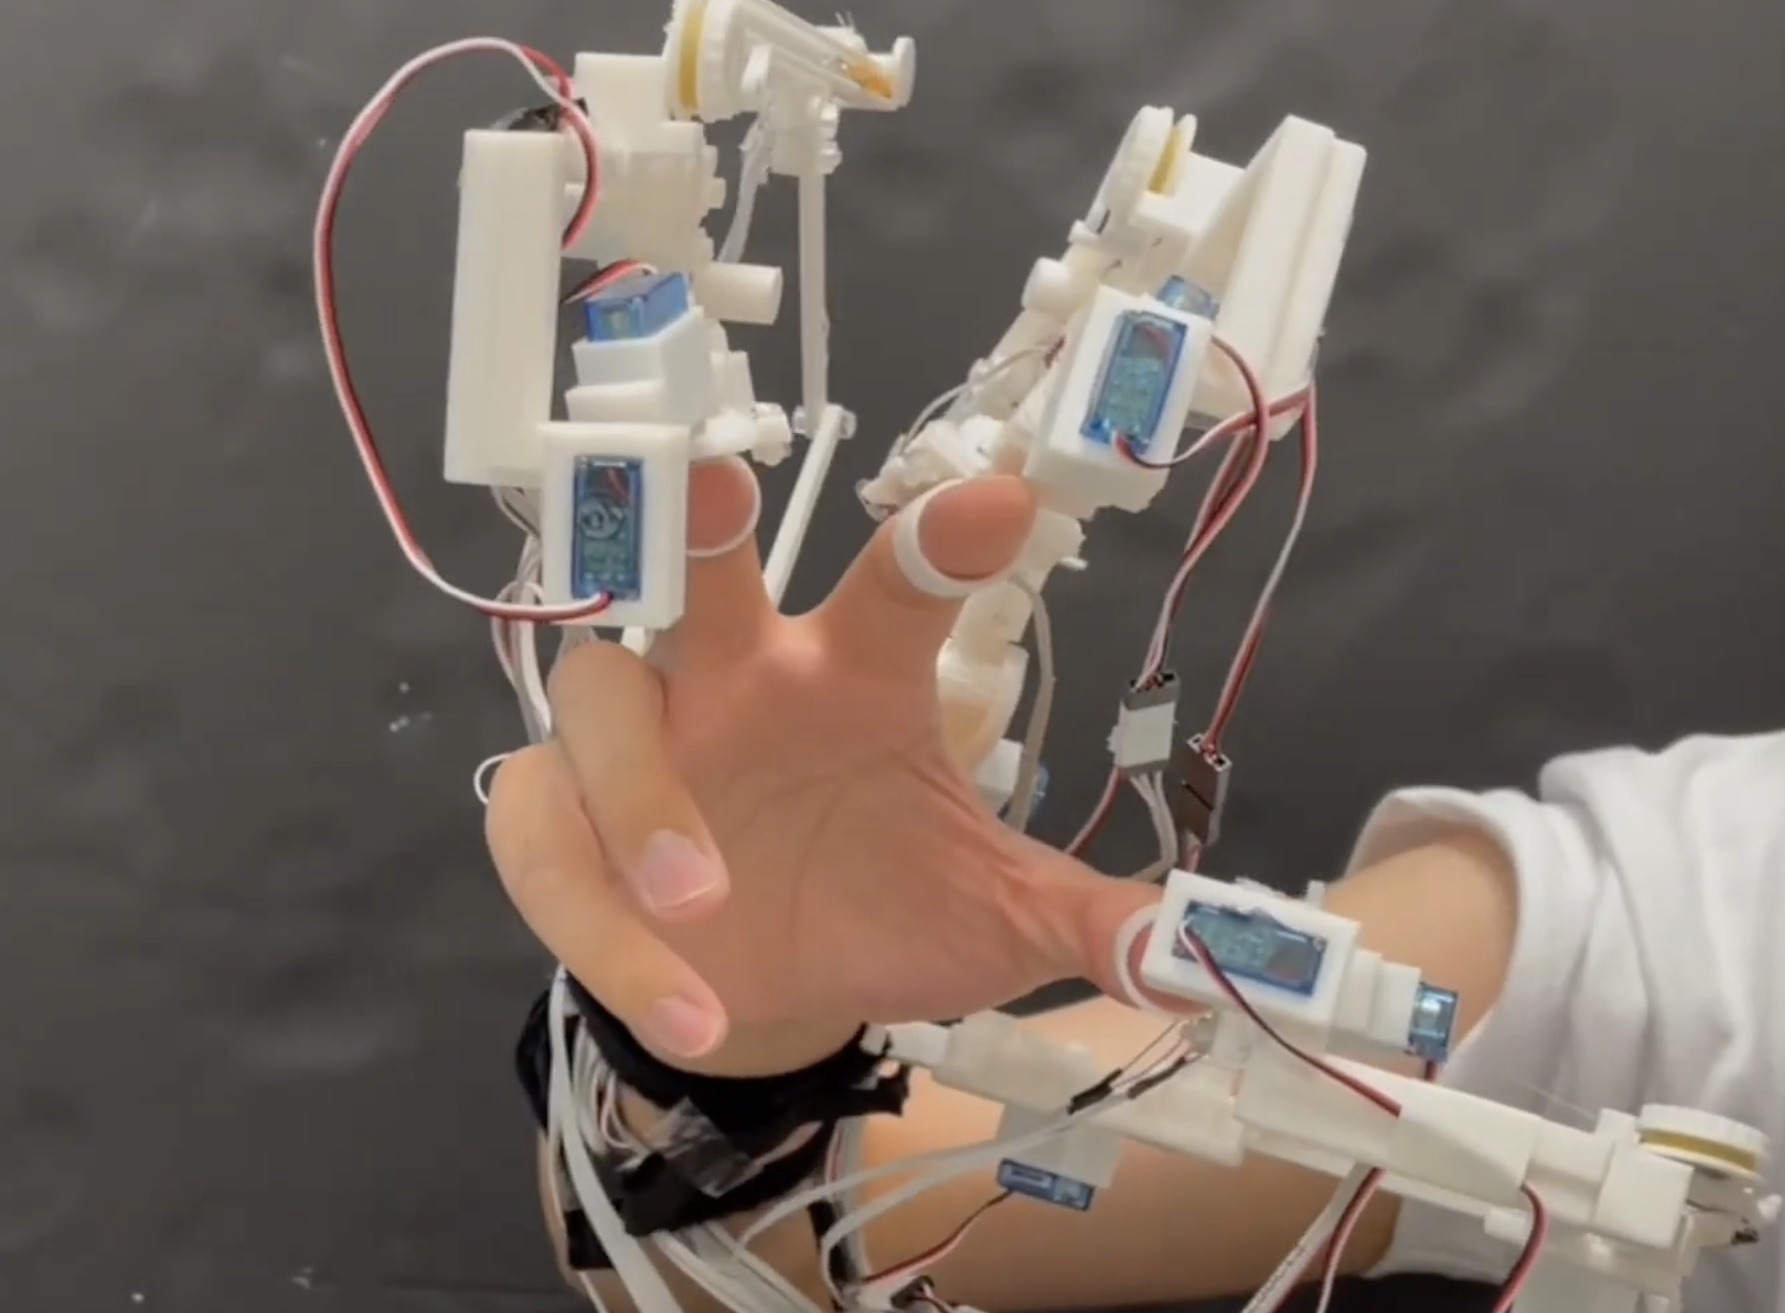 This strange exoskeleton glove enables VR force feedback